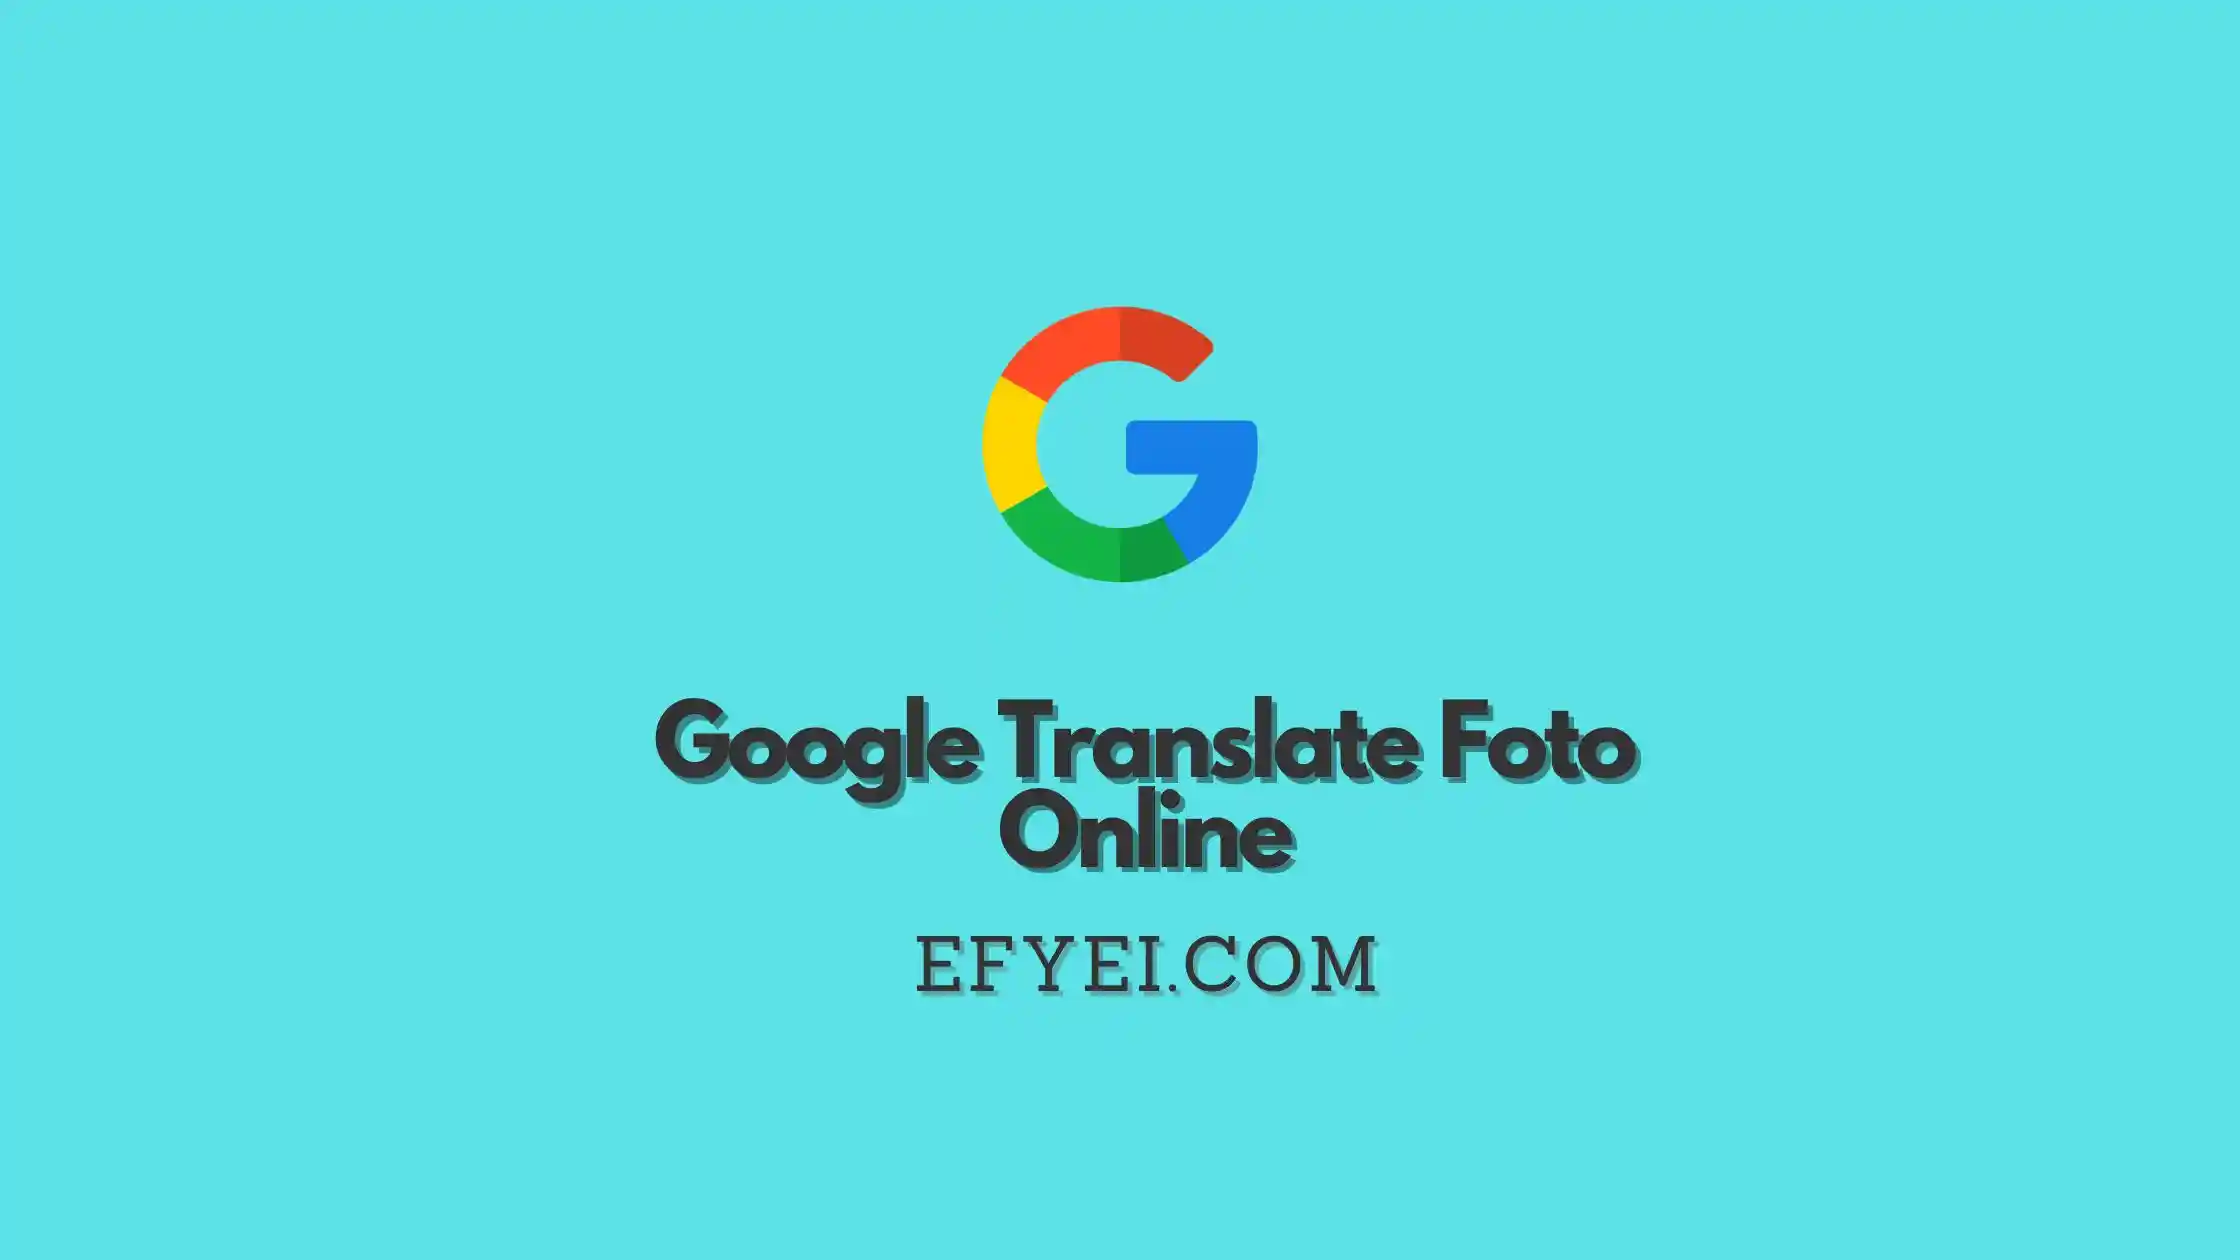 Google Translate Foto Online